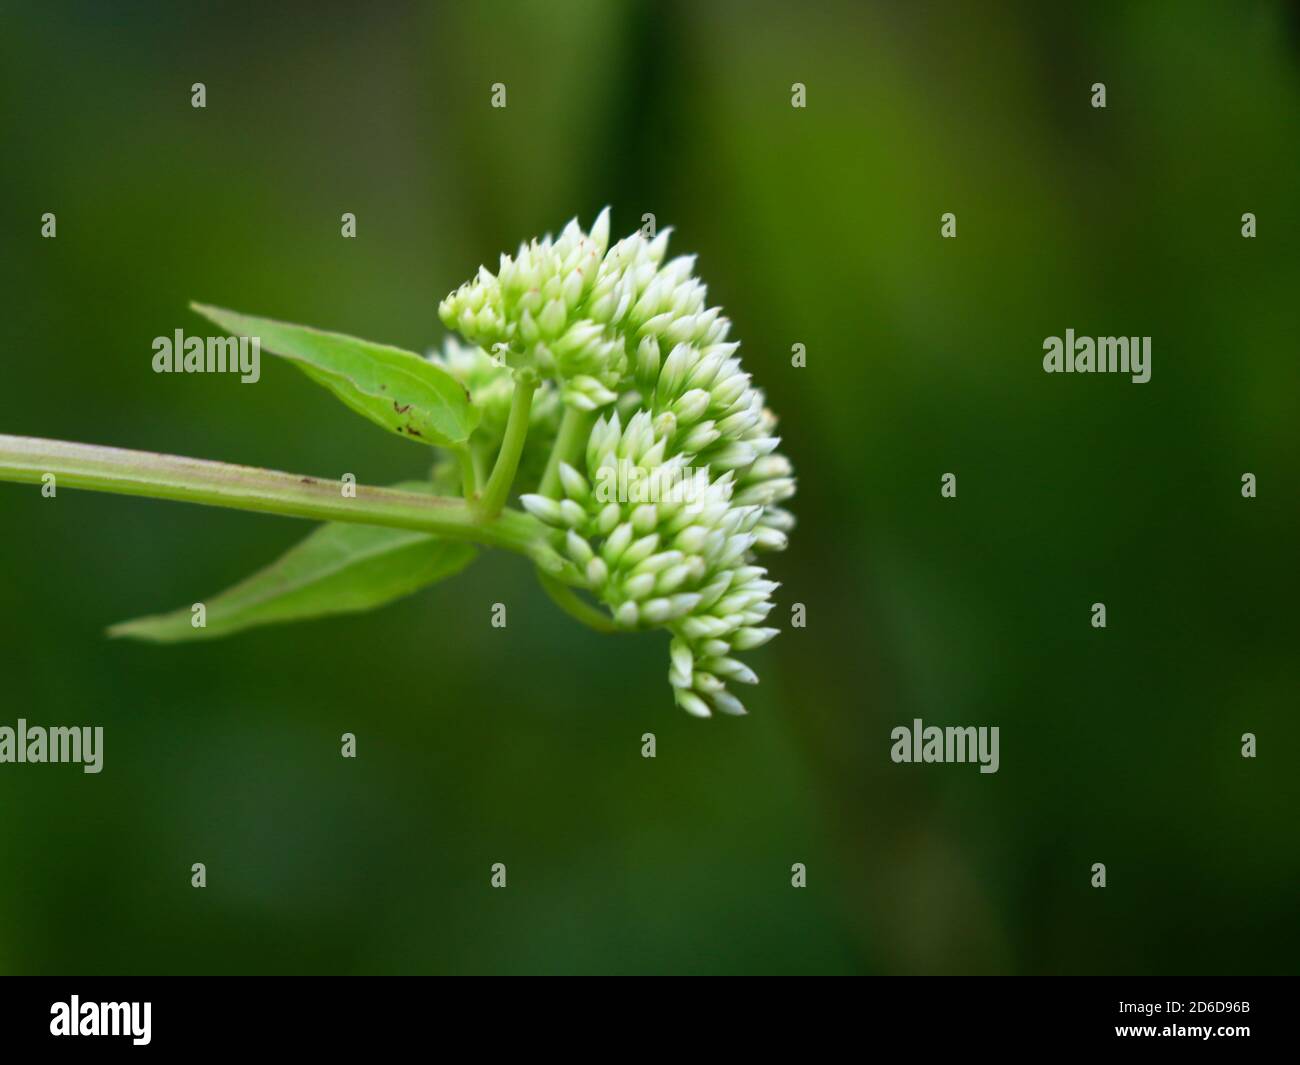 Tiny white flowers of mikania scandens or climbing hempweed, selective focus Stock Photo